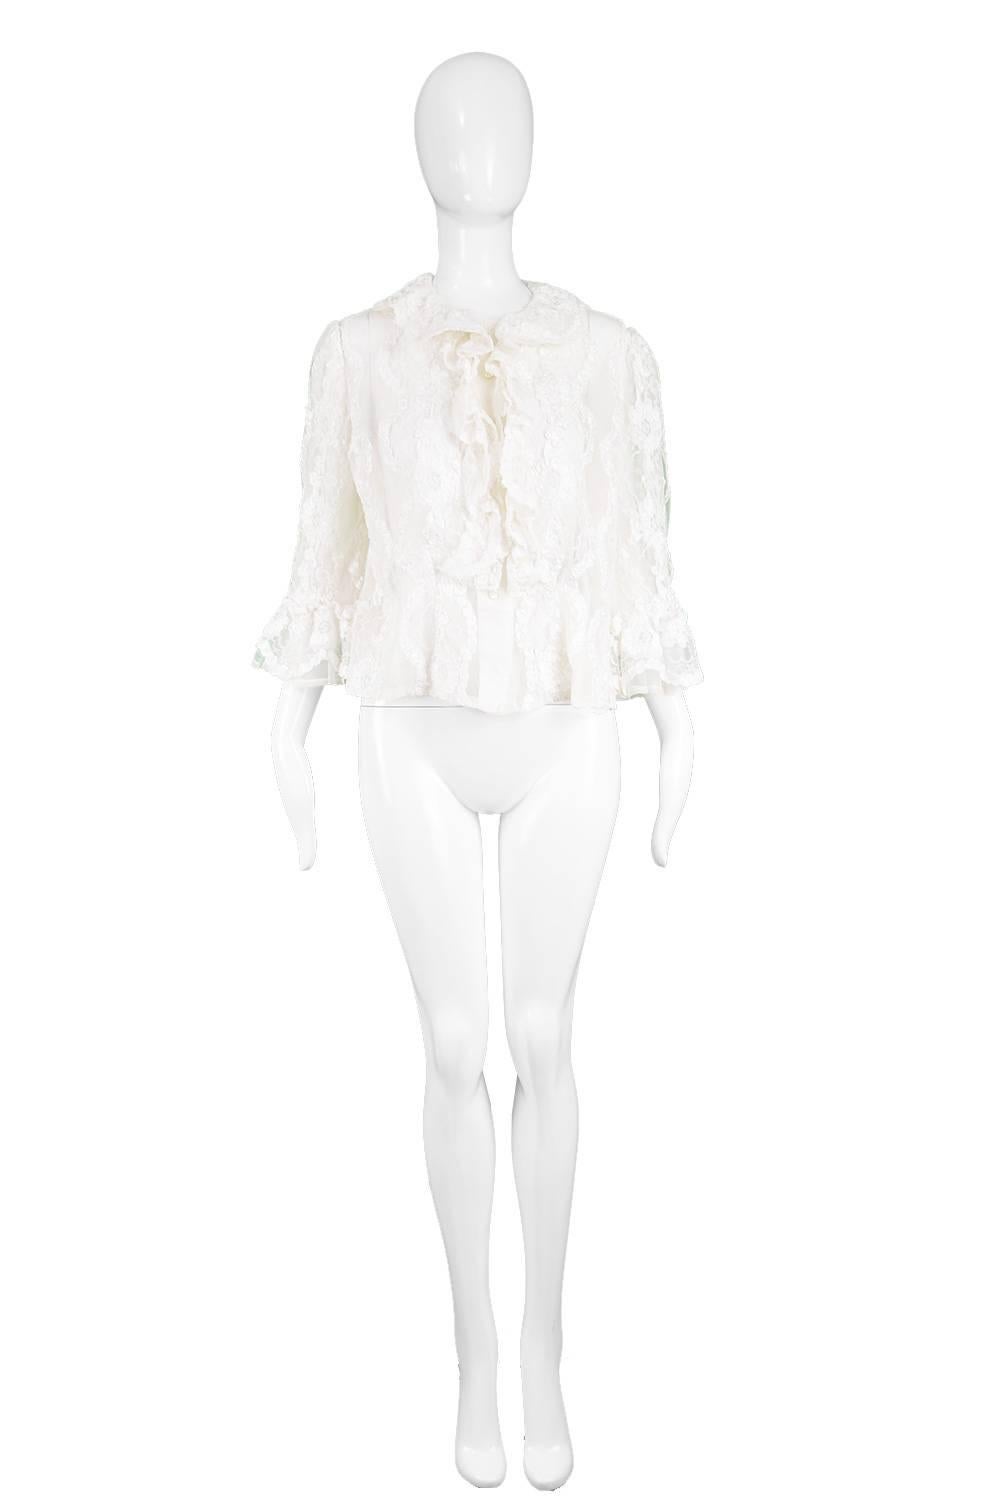 Hardy Amies Couture Vintage 1970s White Chantilly Lace Ribbonwork Ruffle Shirt


Estimated Size: Women's Medium. Please check measurements. 
Bust - 40” / 101cm
Waist - 38” / 96cm
Length (Shoulder to Hem) - 20” / 51cm
Shoulder to Shoulder - 15” /